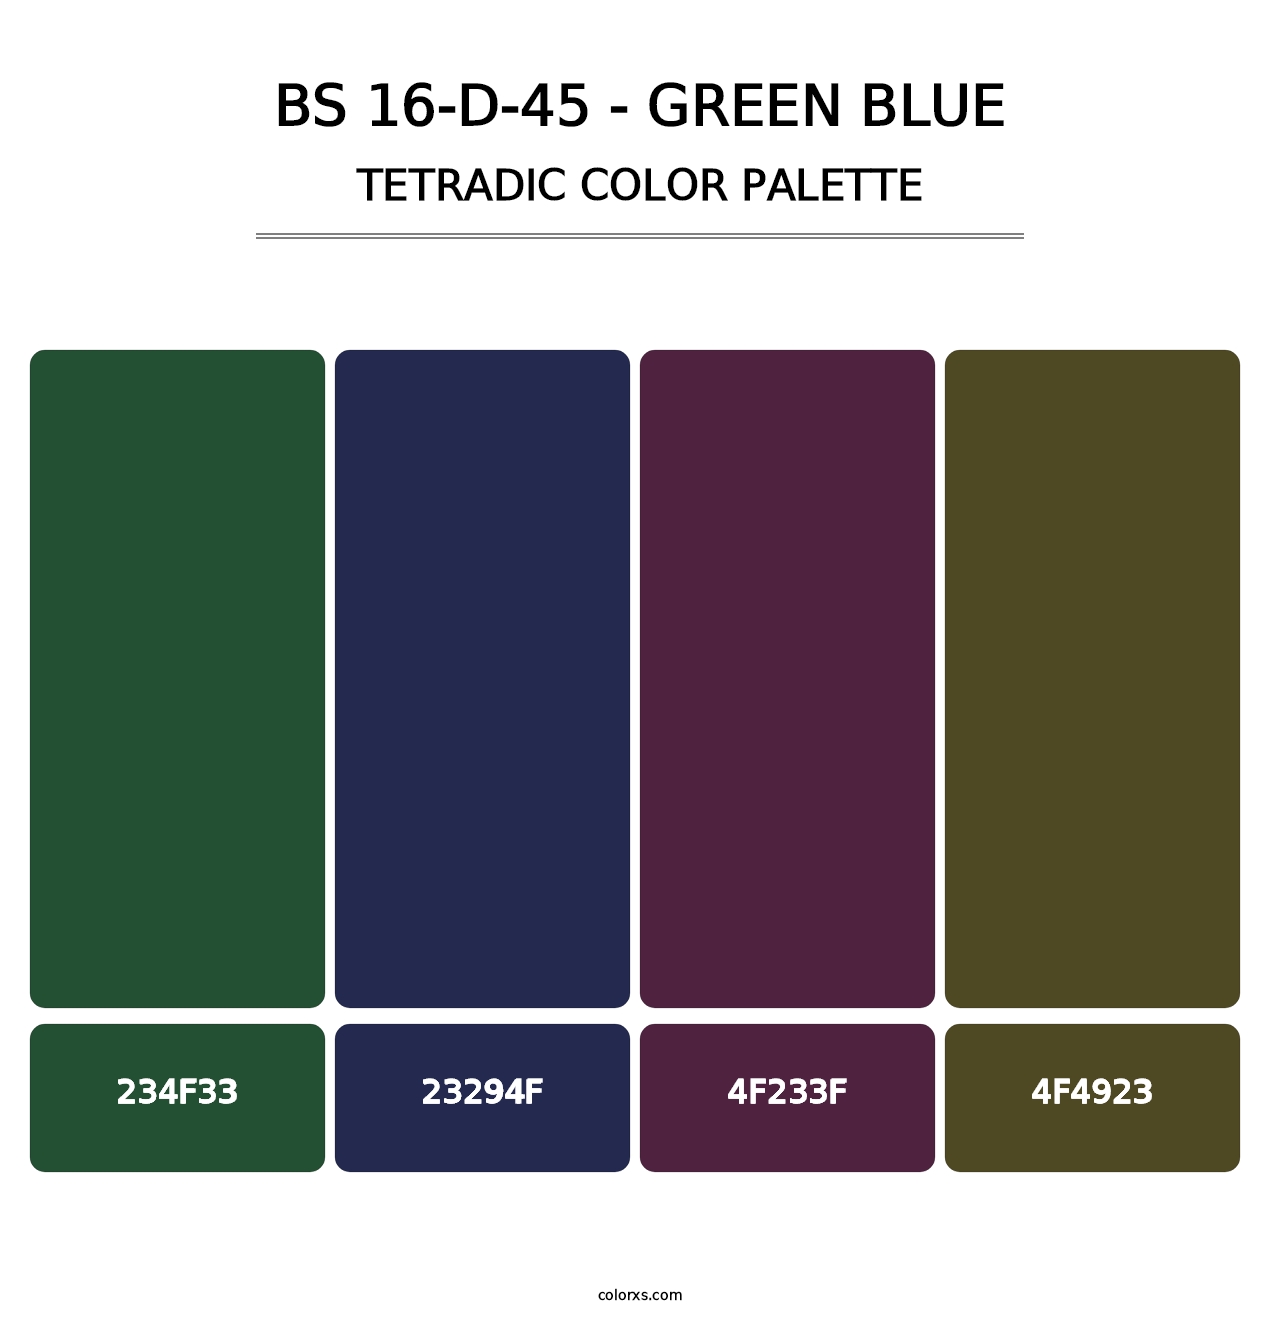 BS 16-D-45 - Green Blue - Tetradic Color Palette